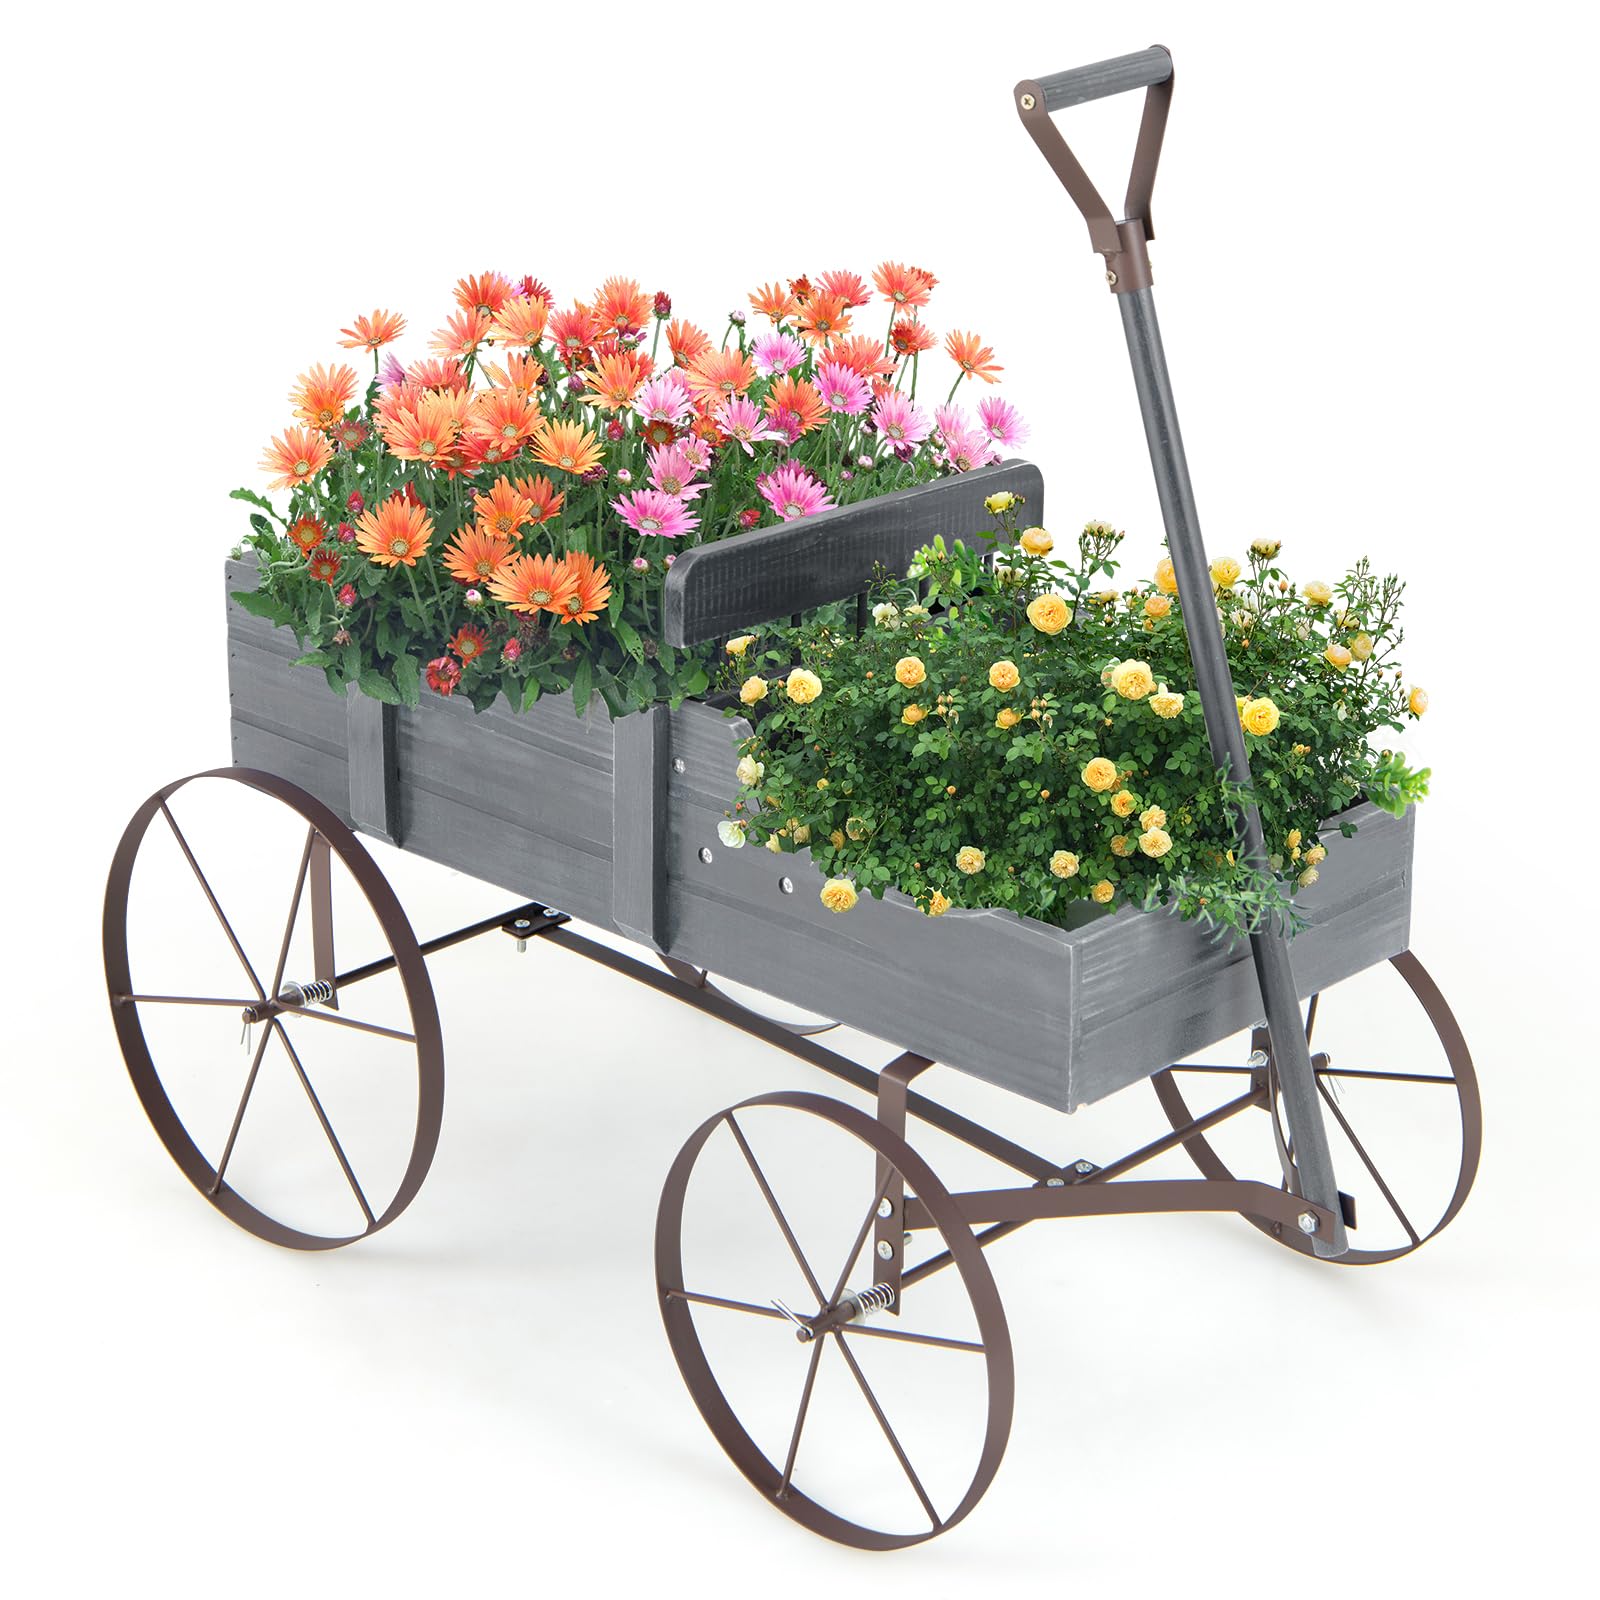 Giantex Decorative Garden Planter, Small Wagon Cart with Metal Wheels, Wood Raised Beds Plant Pot Stand for Backyard Garden Patio 24.5"x13.5"x24"